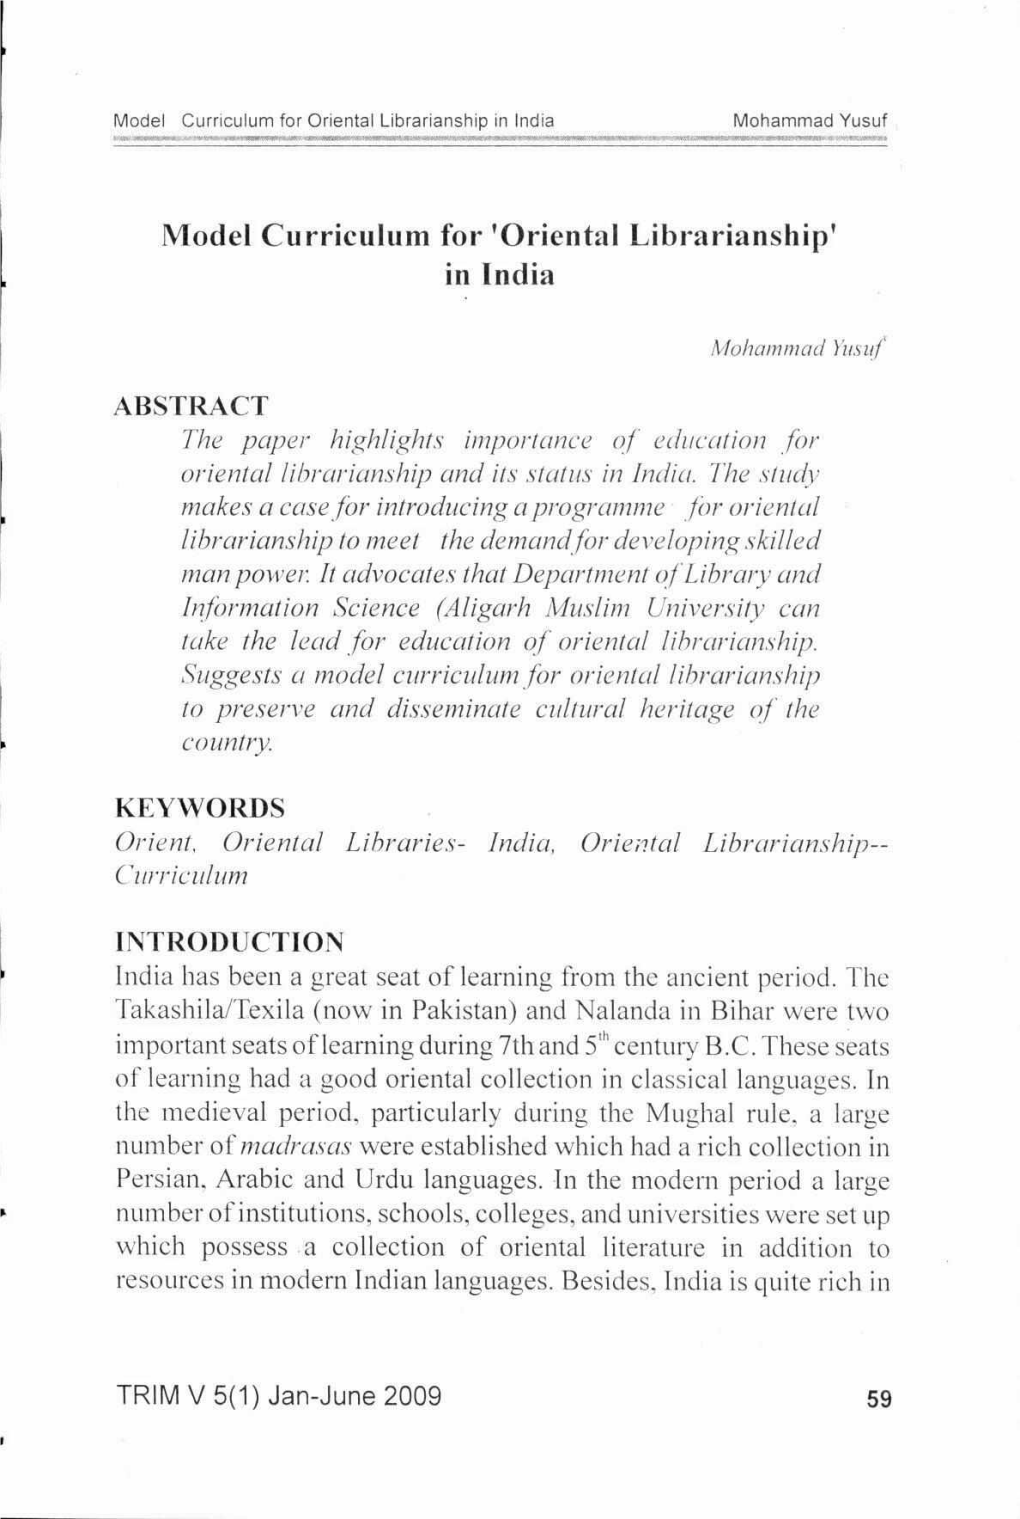 Model Curriculum for 'Oriental Librarianship' in India